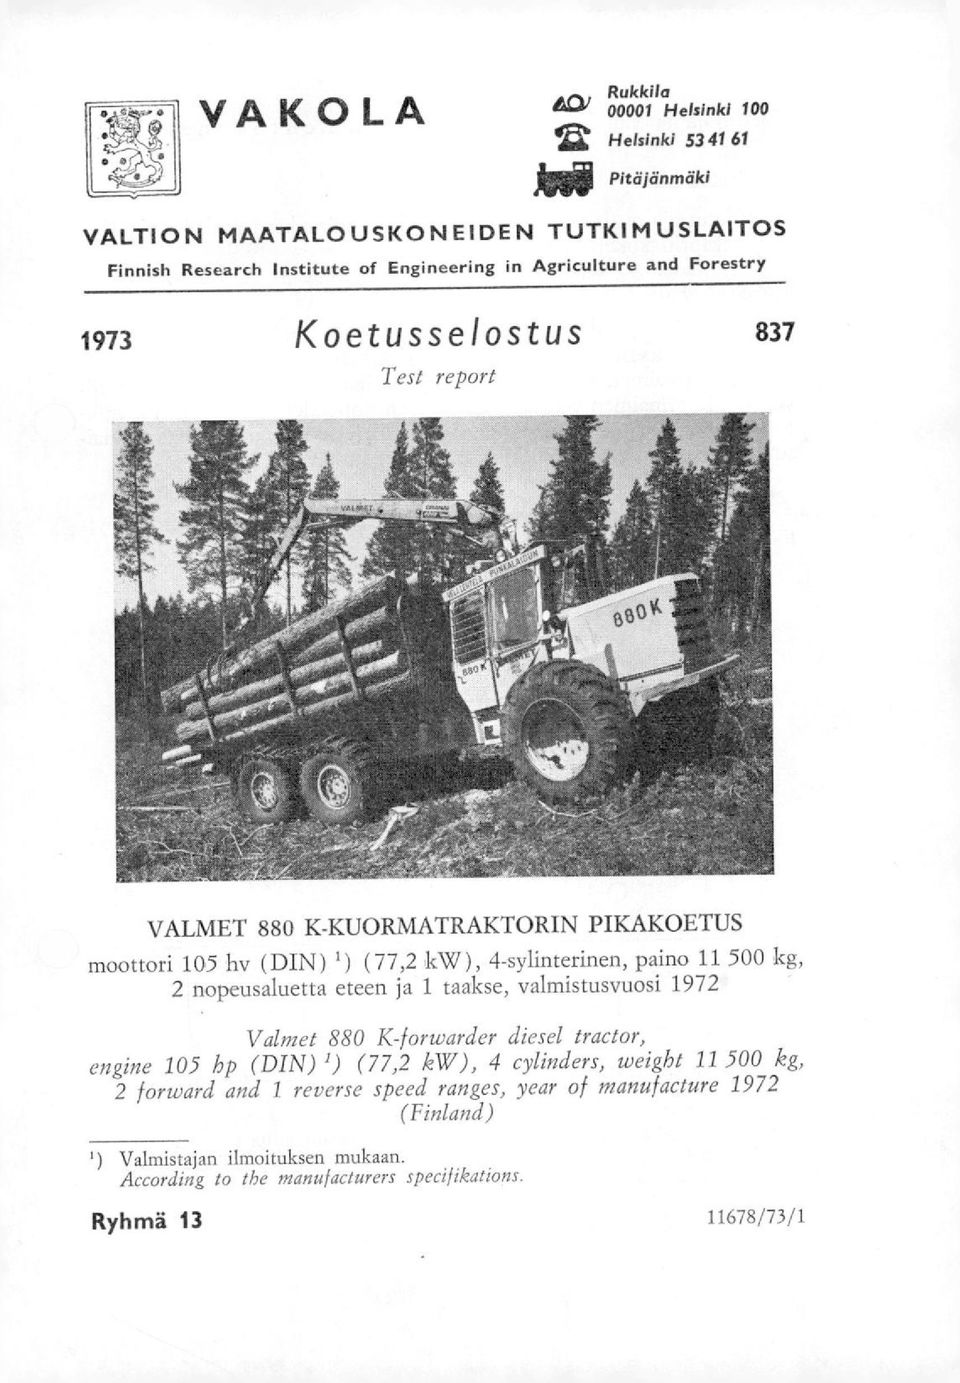 500 kg, 2 nopeusaluetta eteen ja 1 taakse, valmistusvuosi 1972 Valmet 880 K-forwarder diesel tractor, engine 105 hp (DIN) 1) (77,2 kw), 4 cylinders, weight 11 500